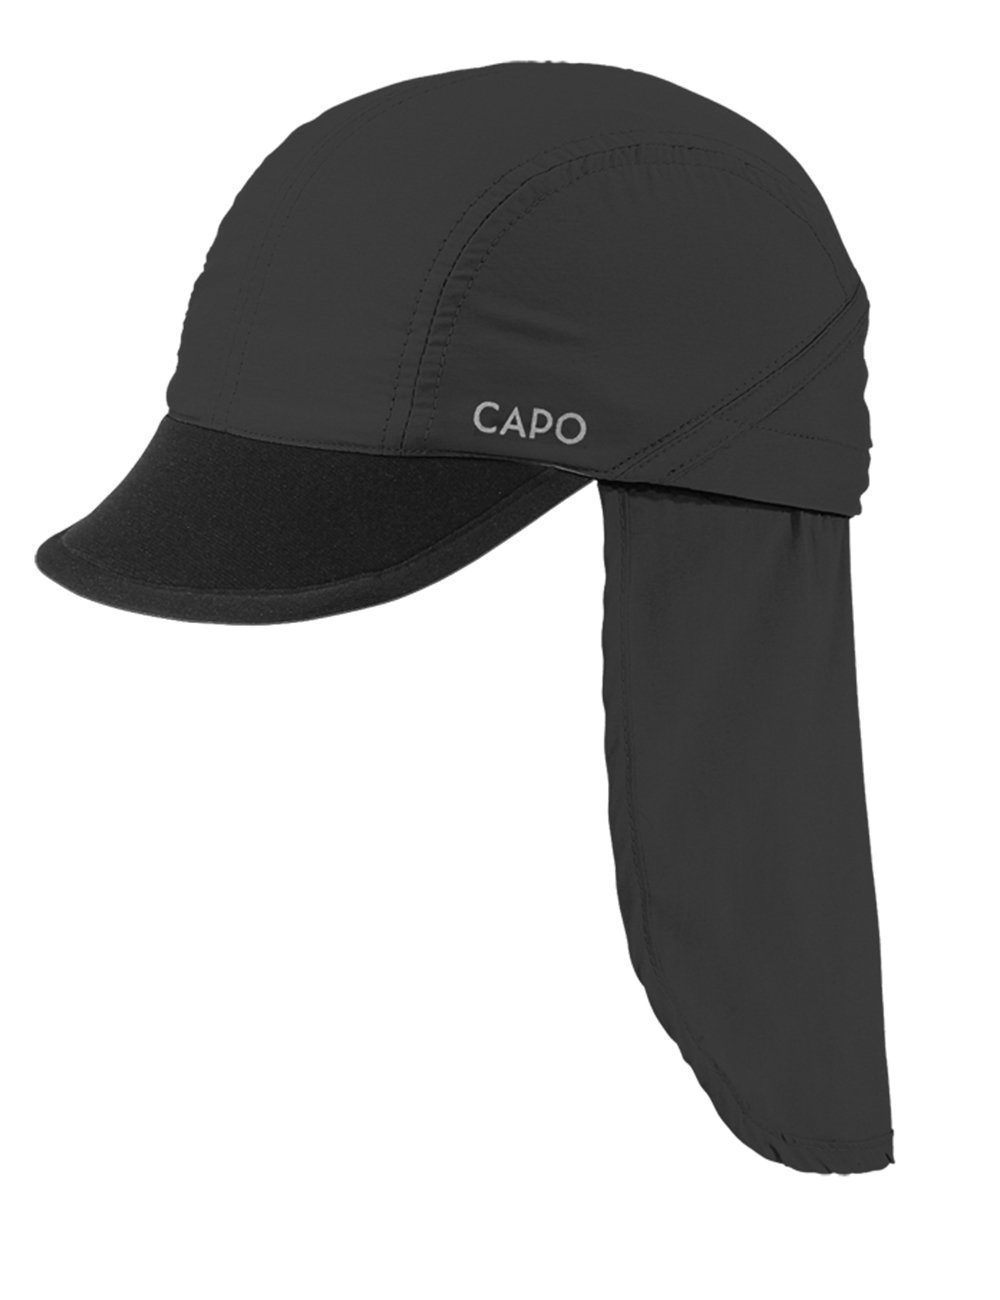 VELCRO CAPO Europe Made NECK CAPO-LIGHT CAP Schirmmütze PROTECTION in